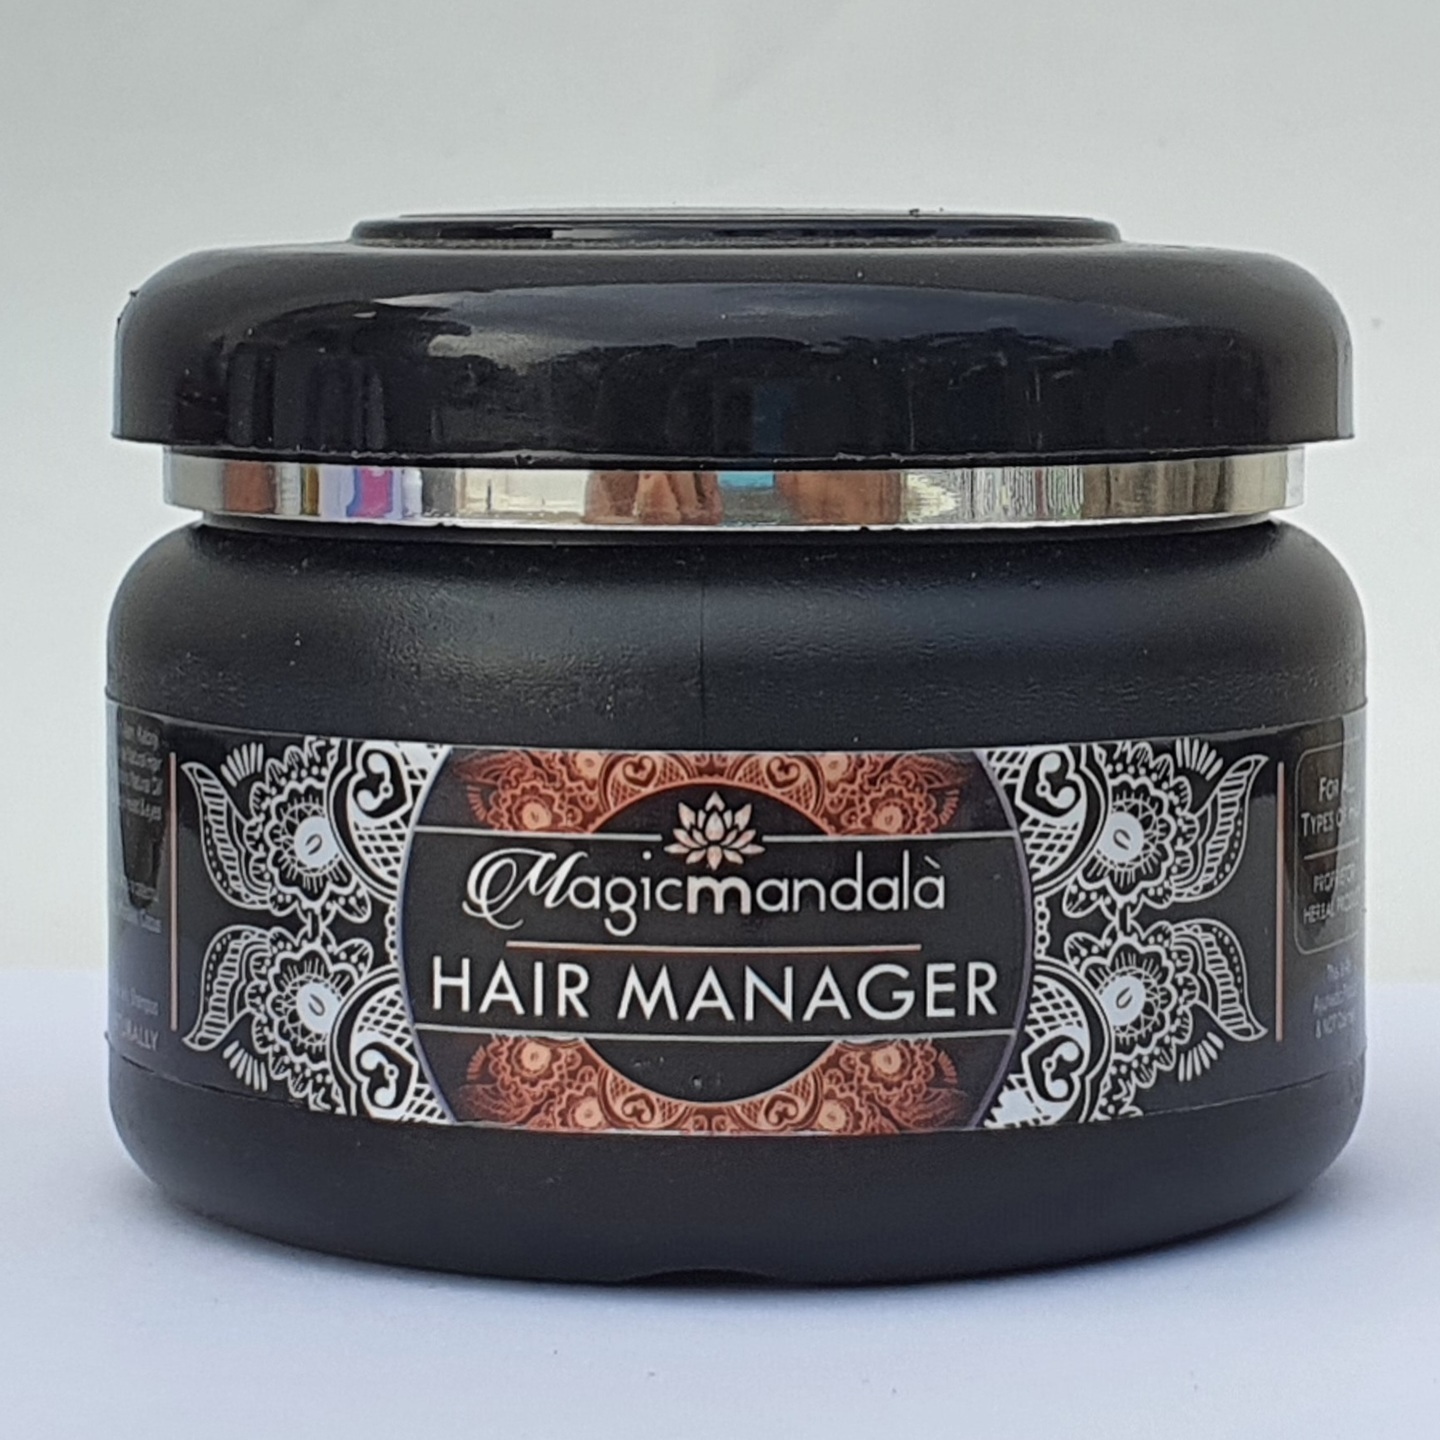 Magic Mandala Hair Manager 200 gm.